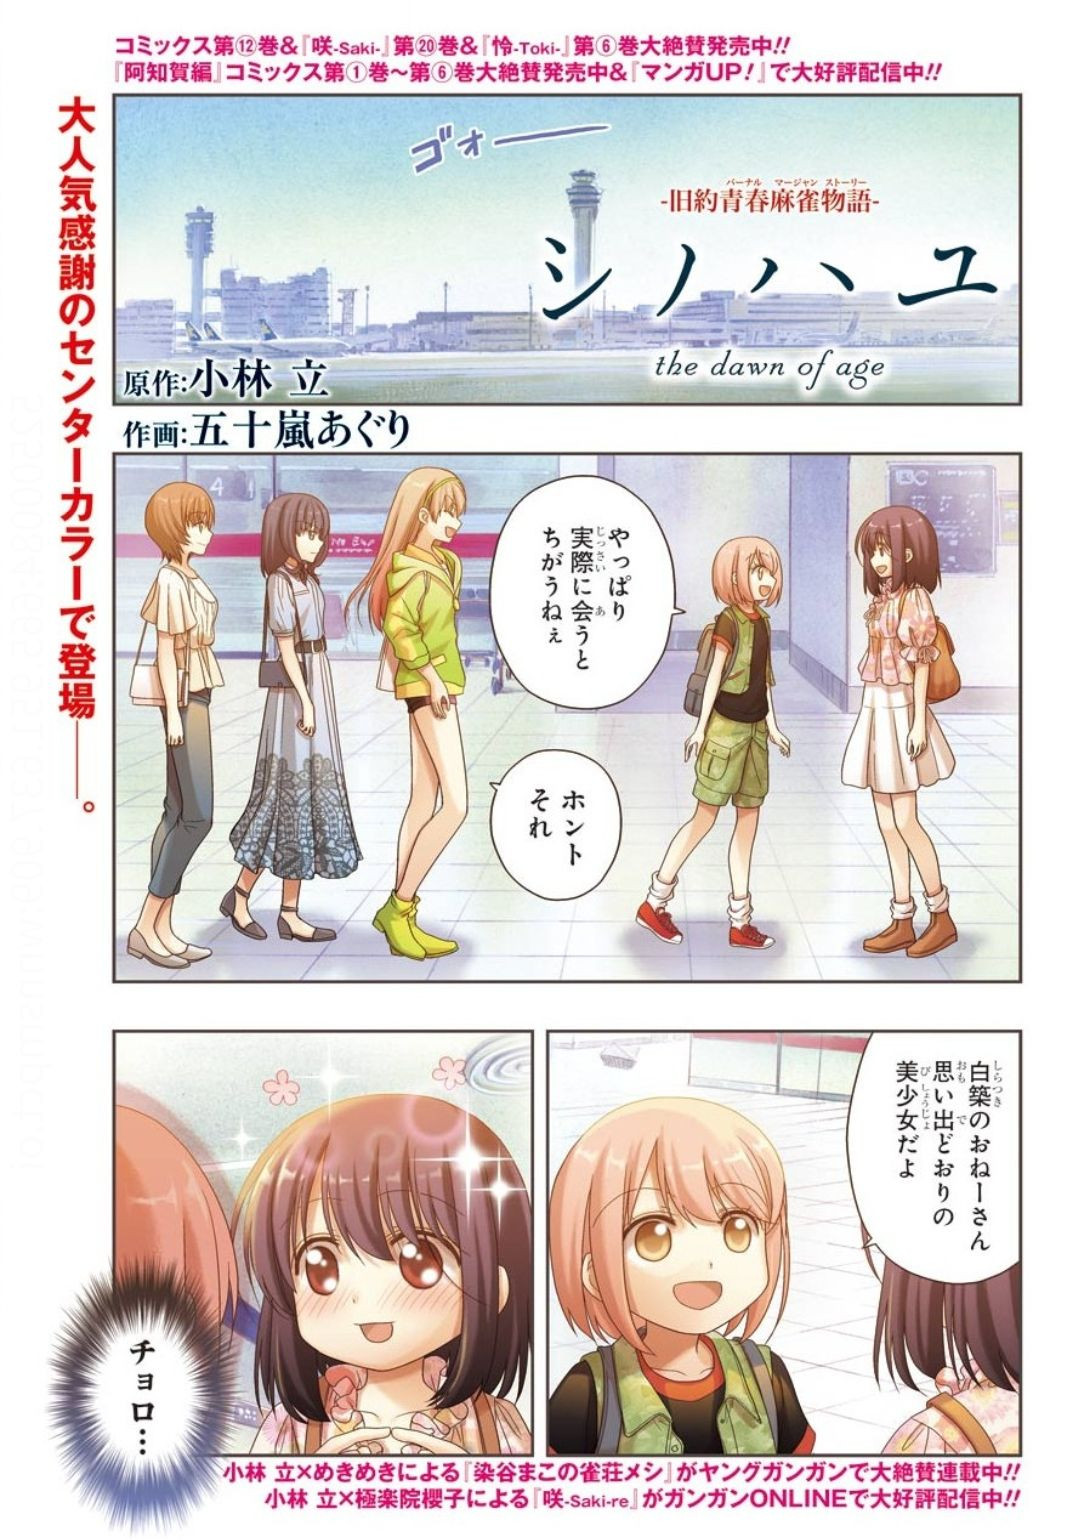 Shinohayu - The Dawn of Age Manga - Chapter 081 - Page 1